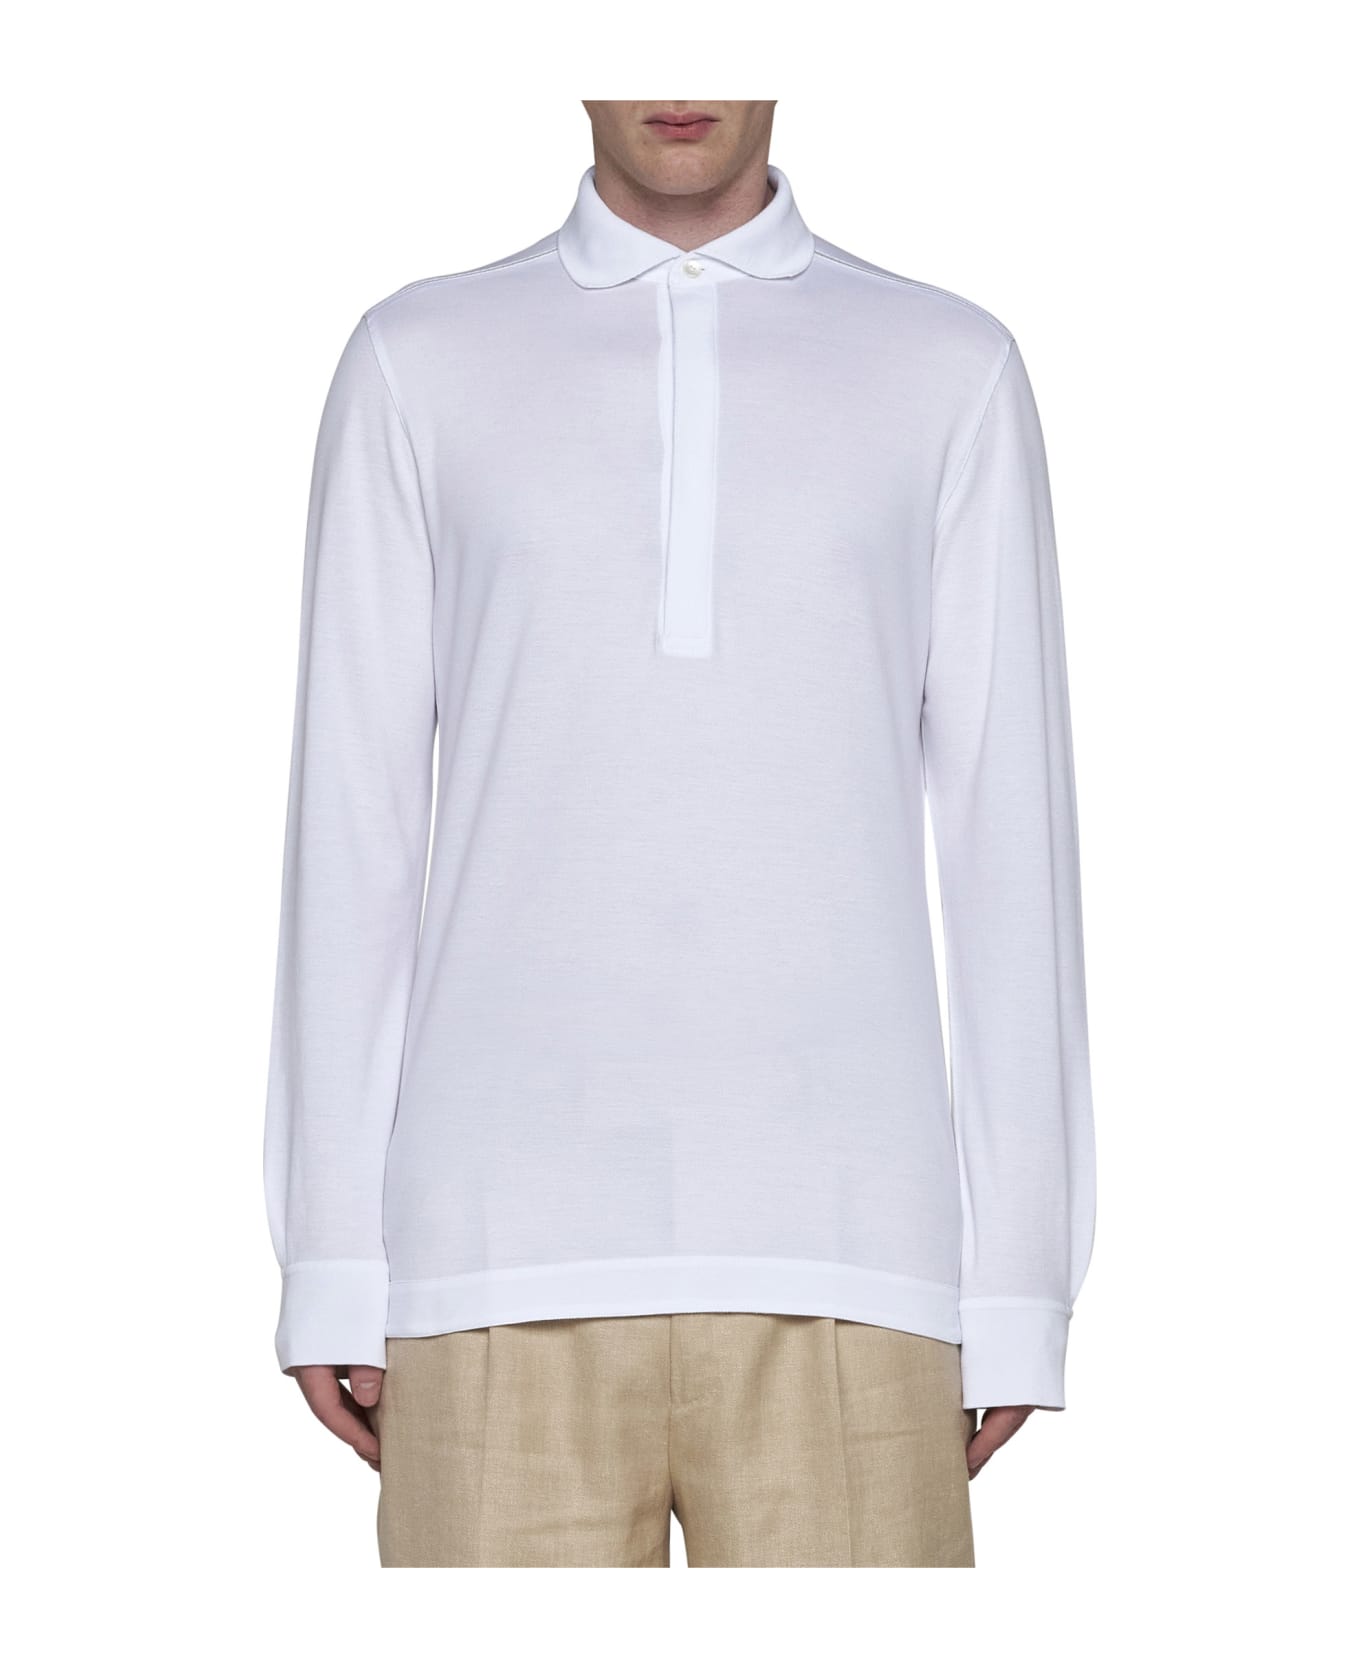 Zegna Polo Shirt - White